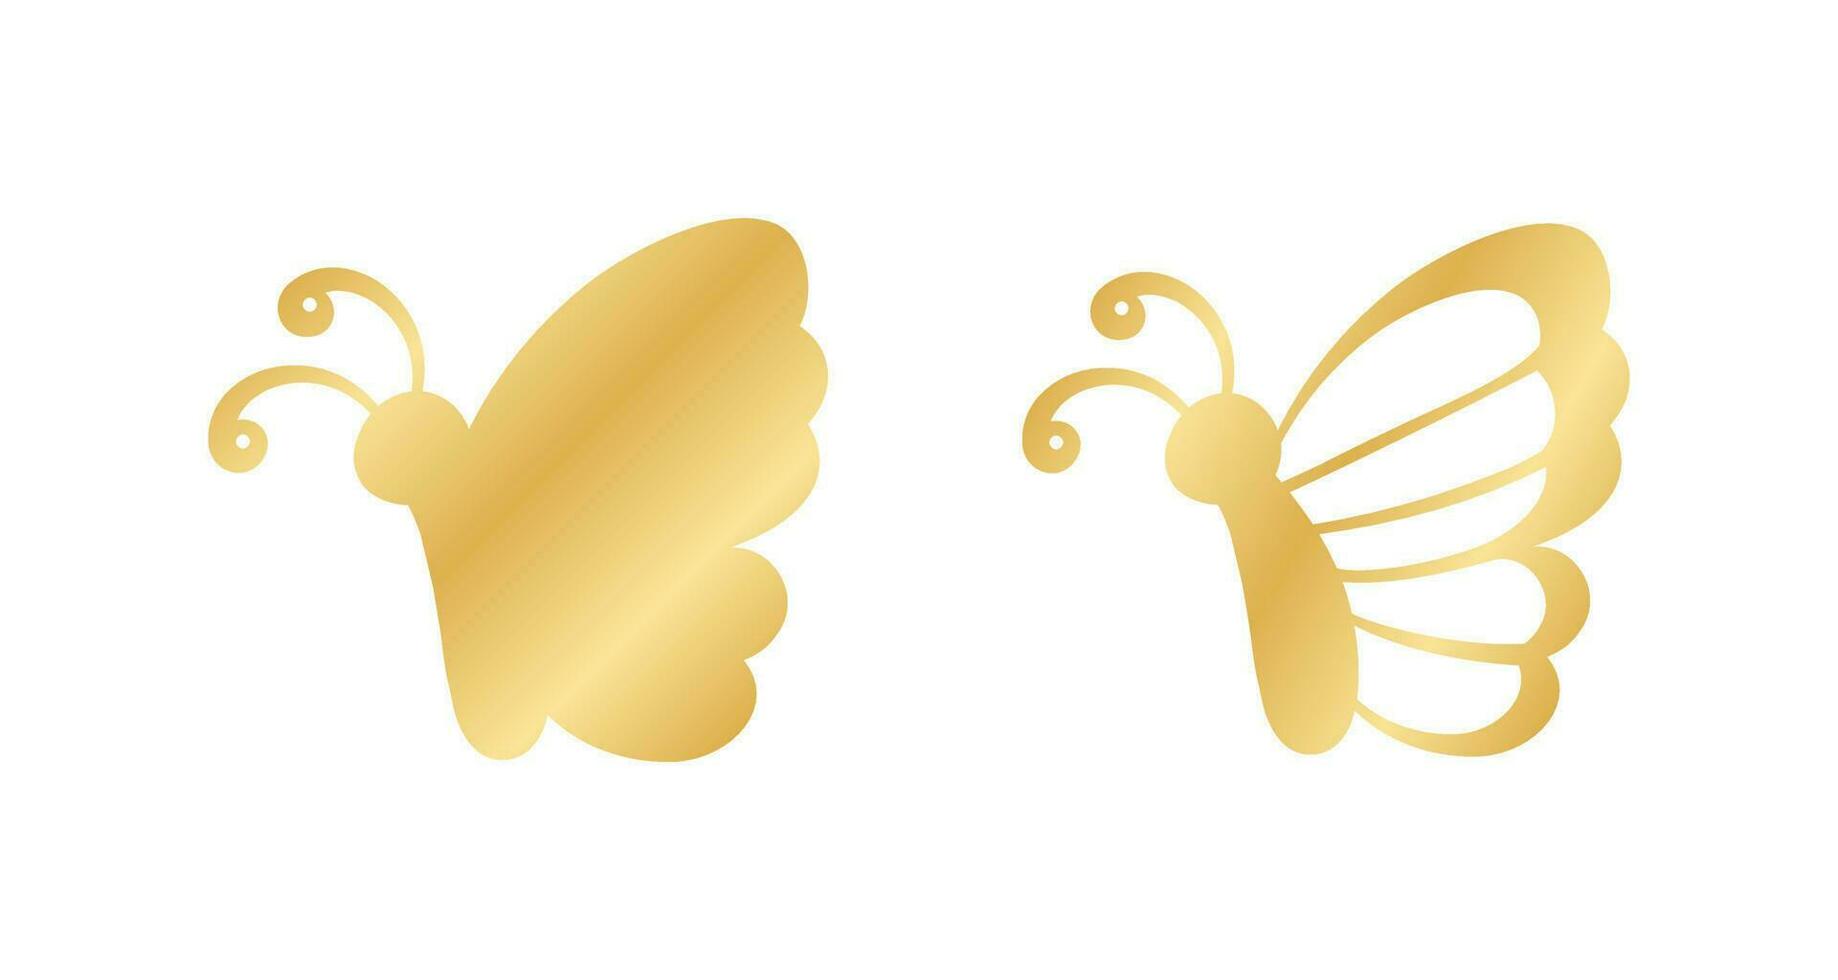 Gold Schmetterling Logo Sammlung. abstrakt golden Schmetterling Silhouette Symbol Vektor Illustration.